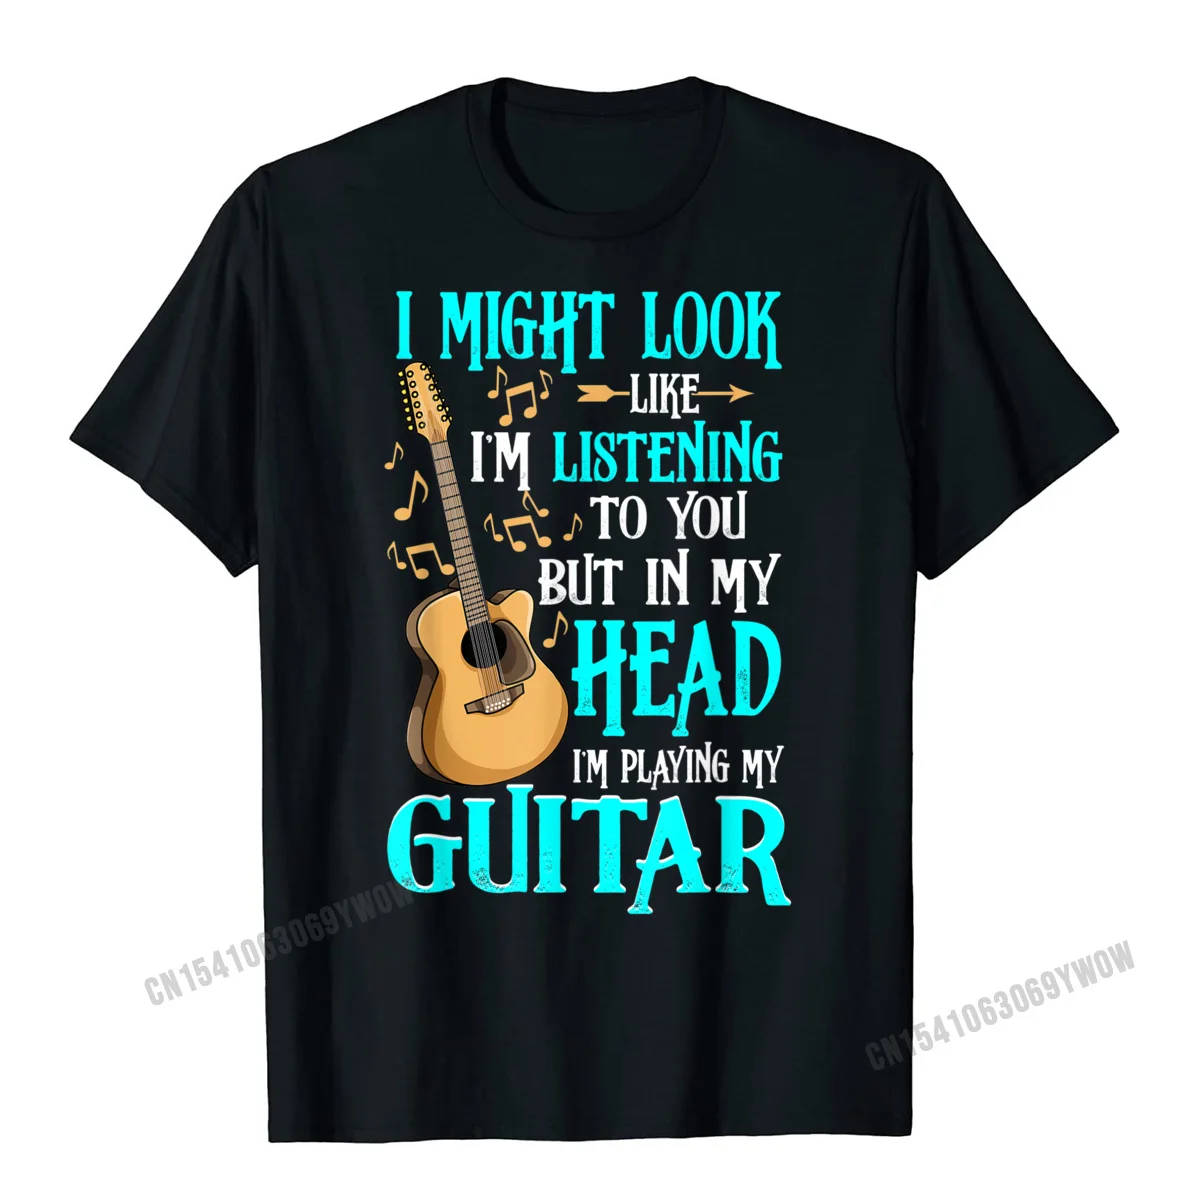 Guitar Shirt Funny I Might Look Like Im Listening To You T-Shirt New Coming Summer T Shirts Harajuku Cotton Men Tops Shirt Cosie